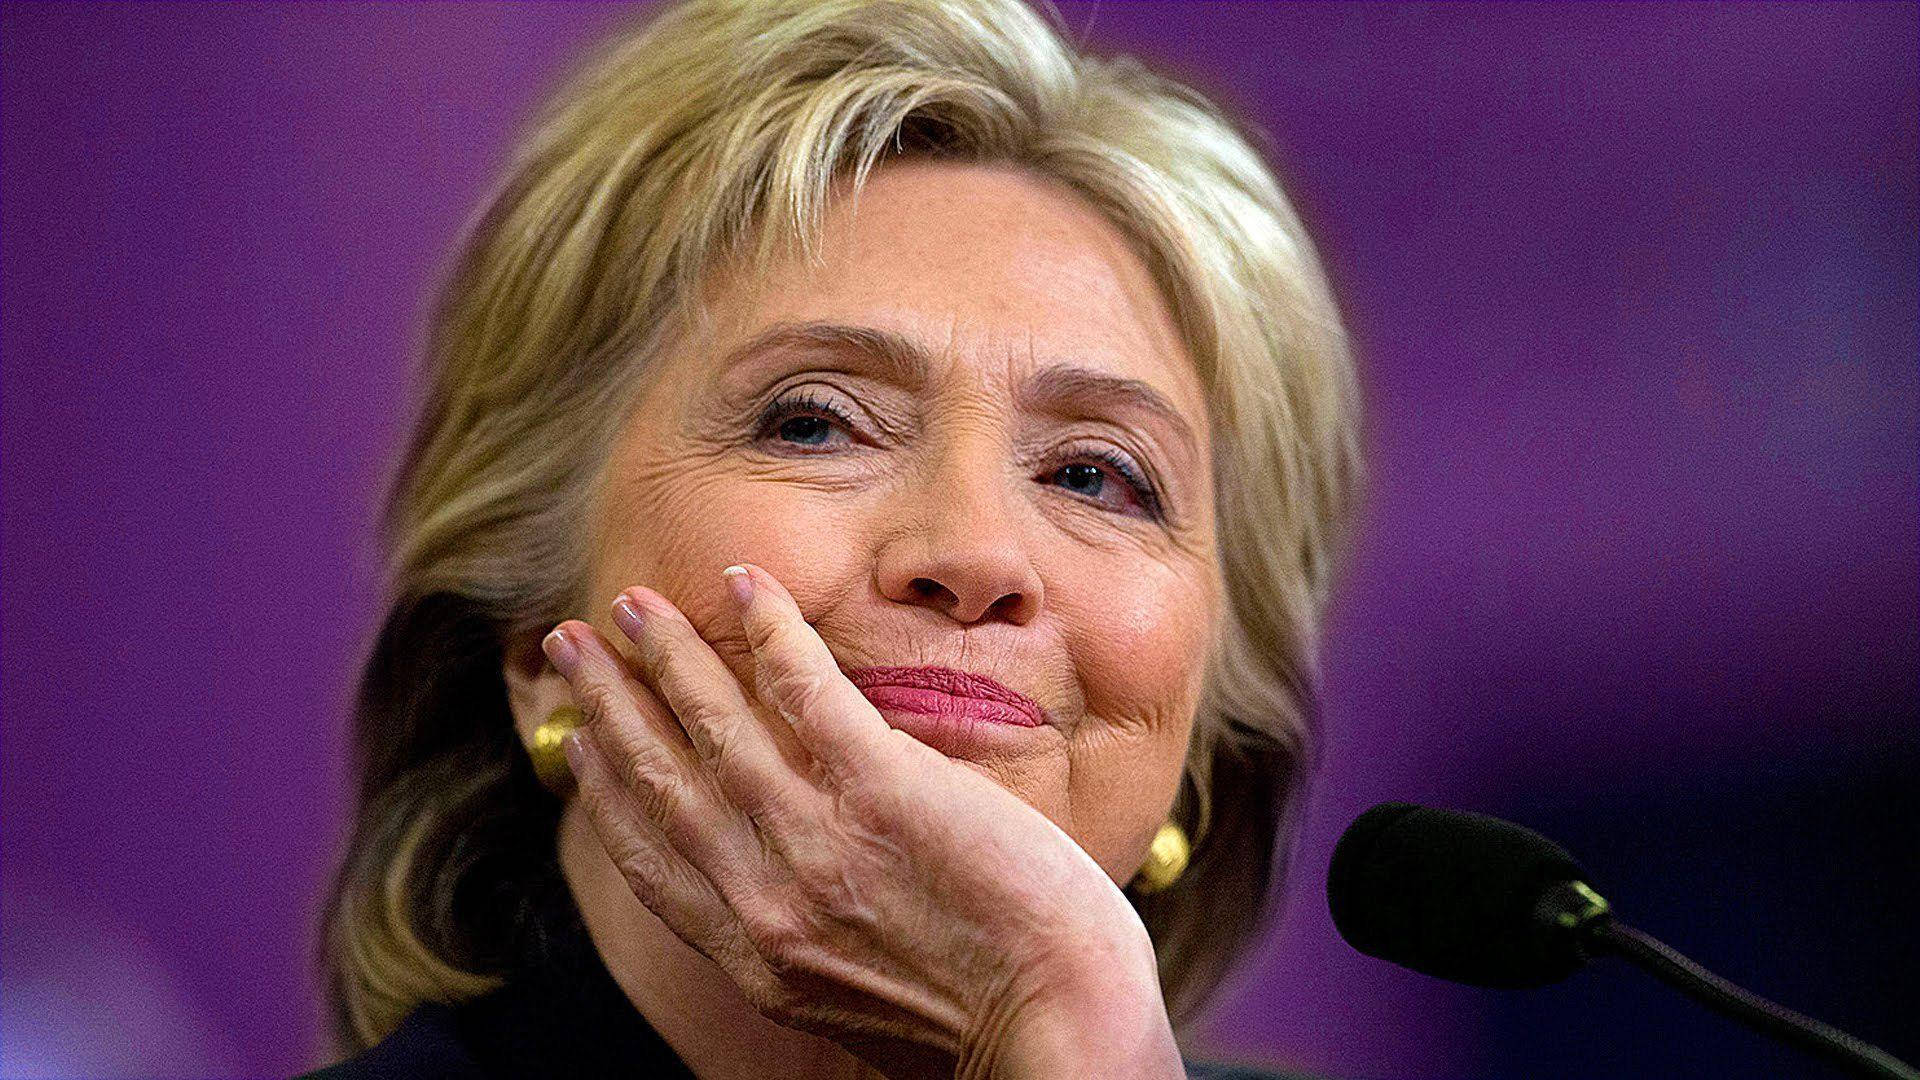 Hillary Clinton Smiling Candid Portrait Wallpaper